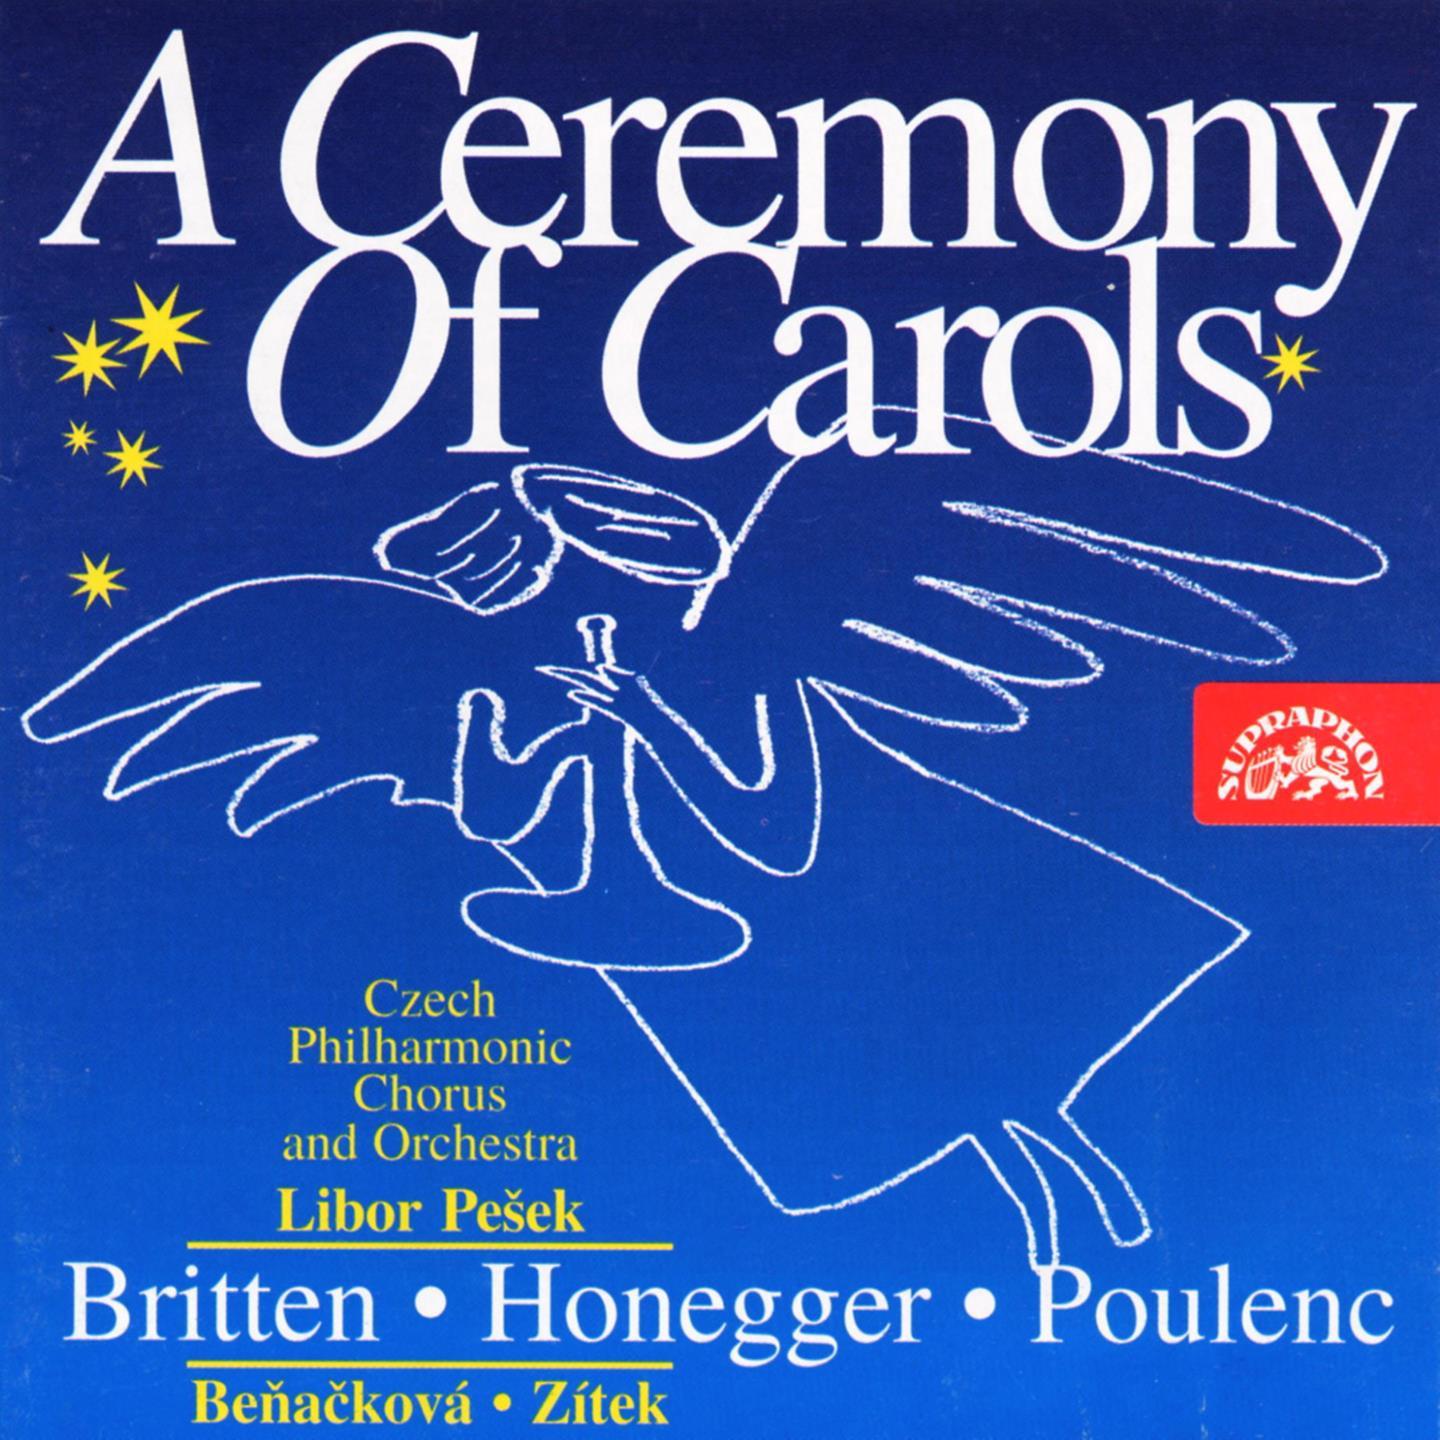 A Ceremony of Carols, Op. 28: I. Procession